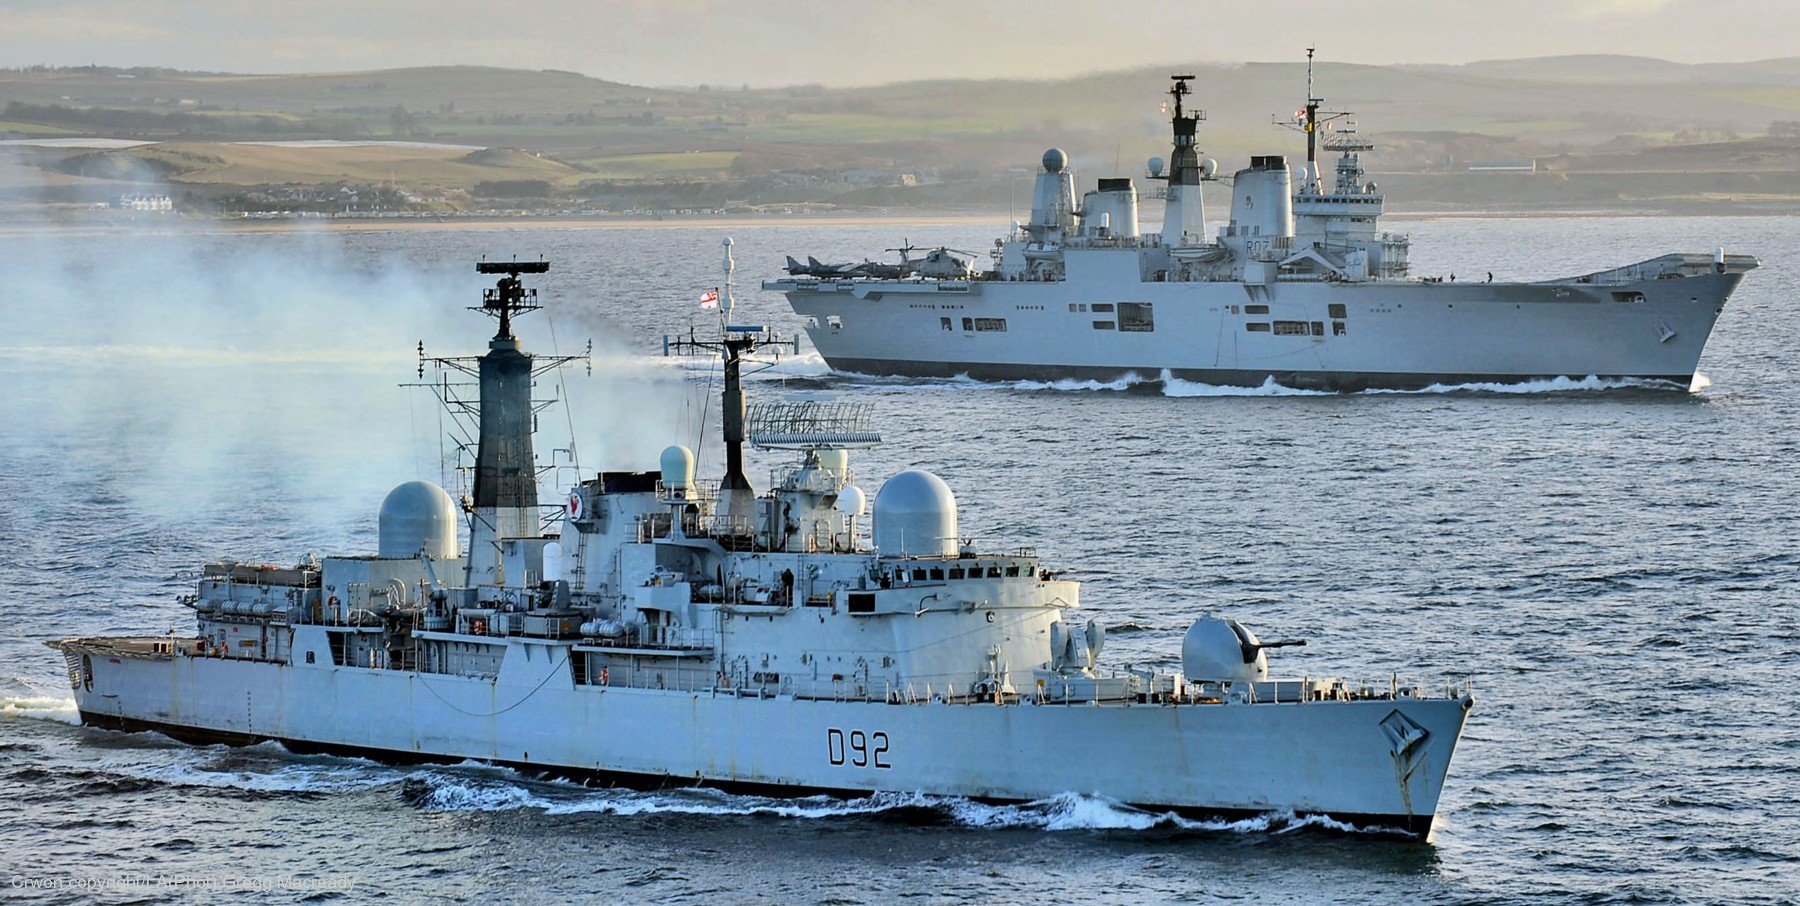 d 92 hms liverpool destroyer royal navy